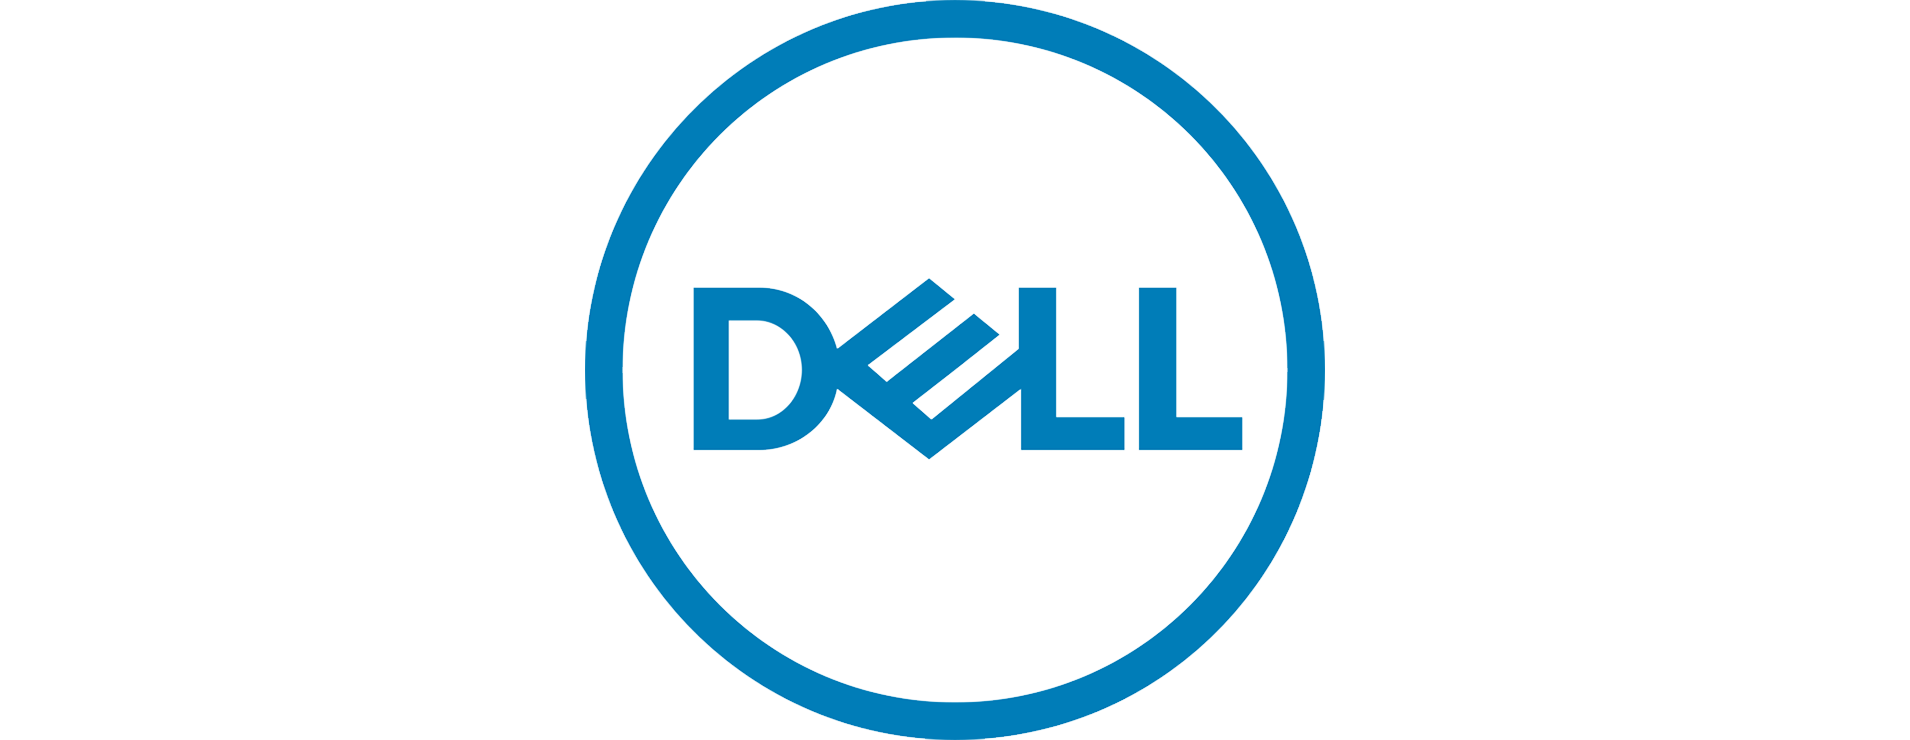 DELL-Logo-Resize